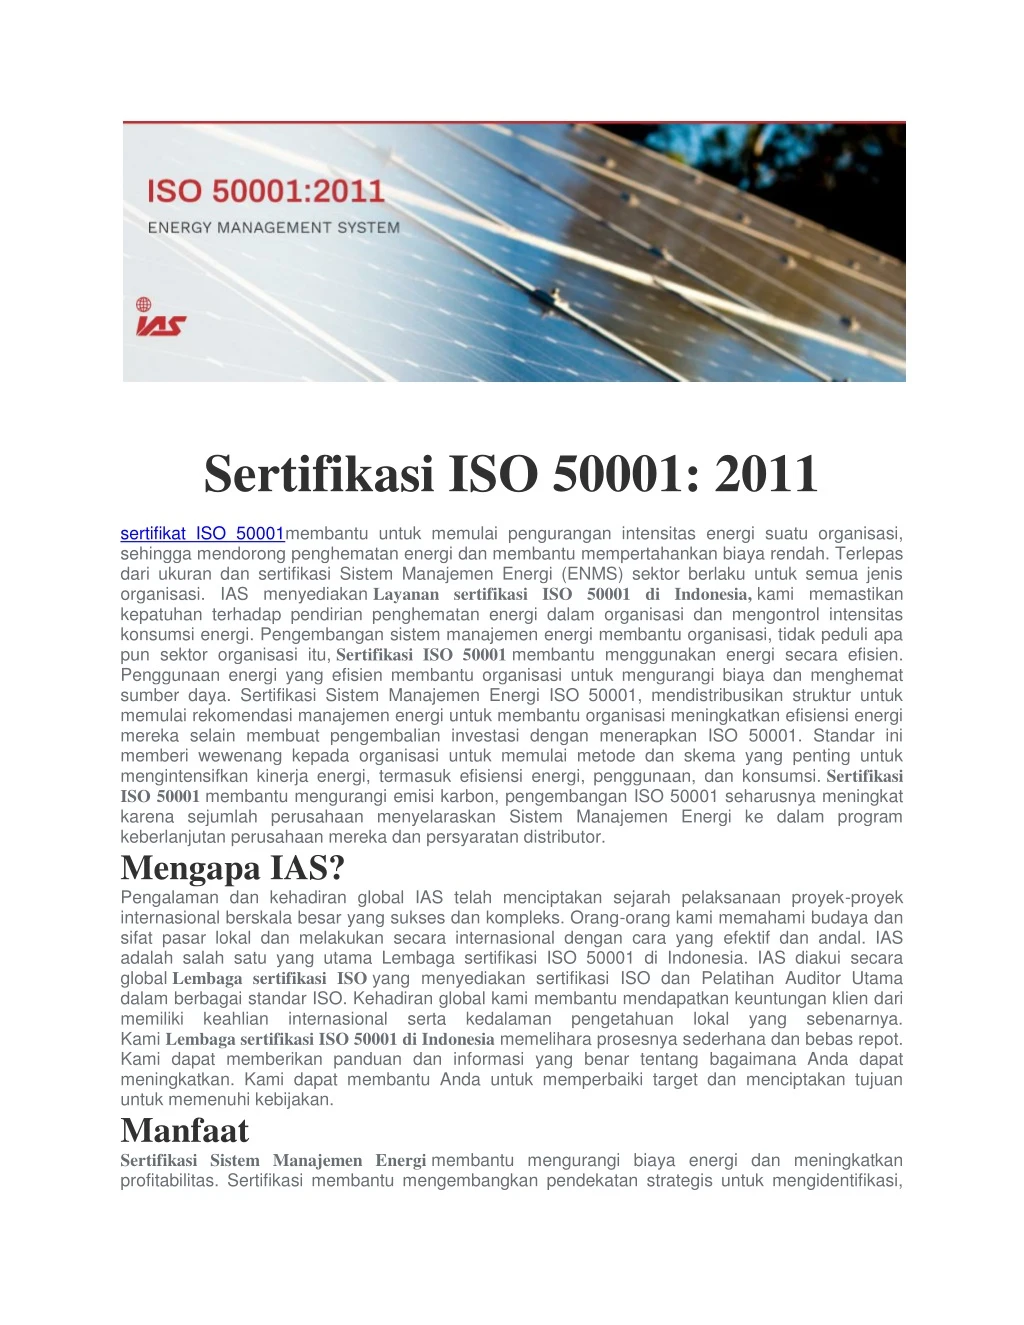 sertifikasi iso 50001 2011